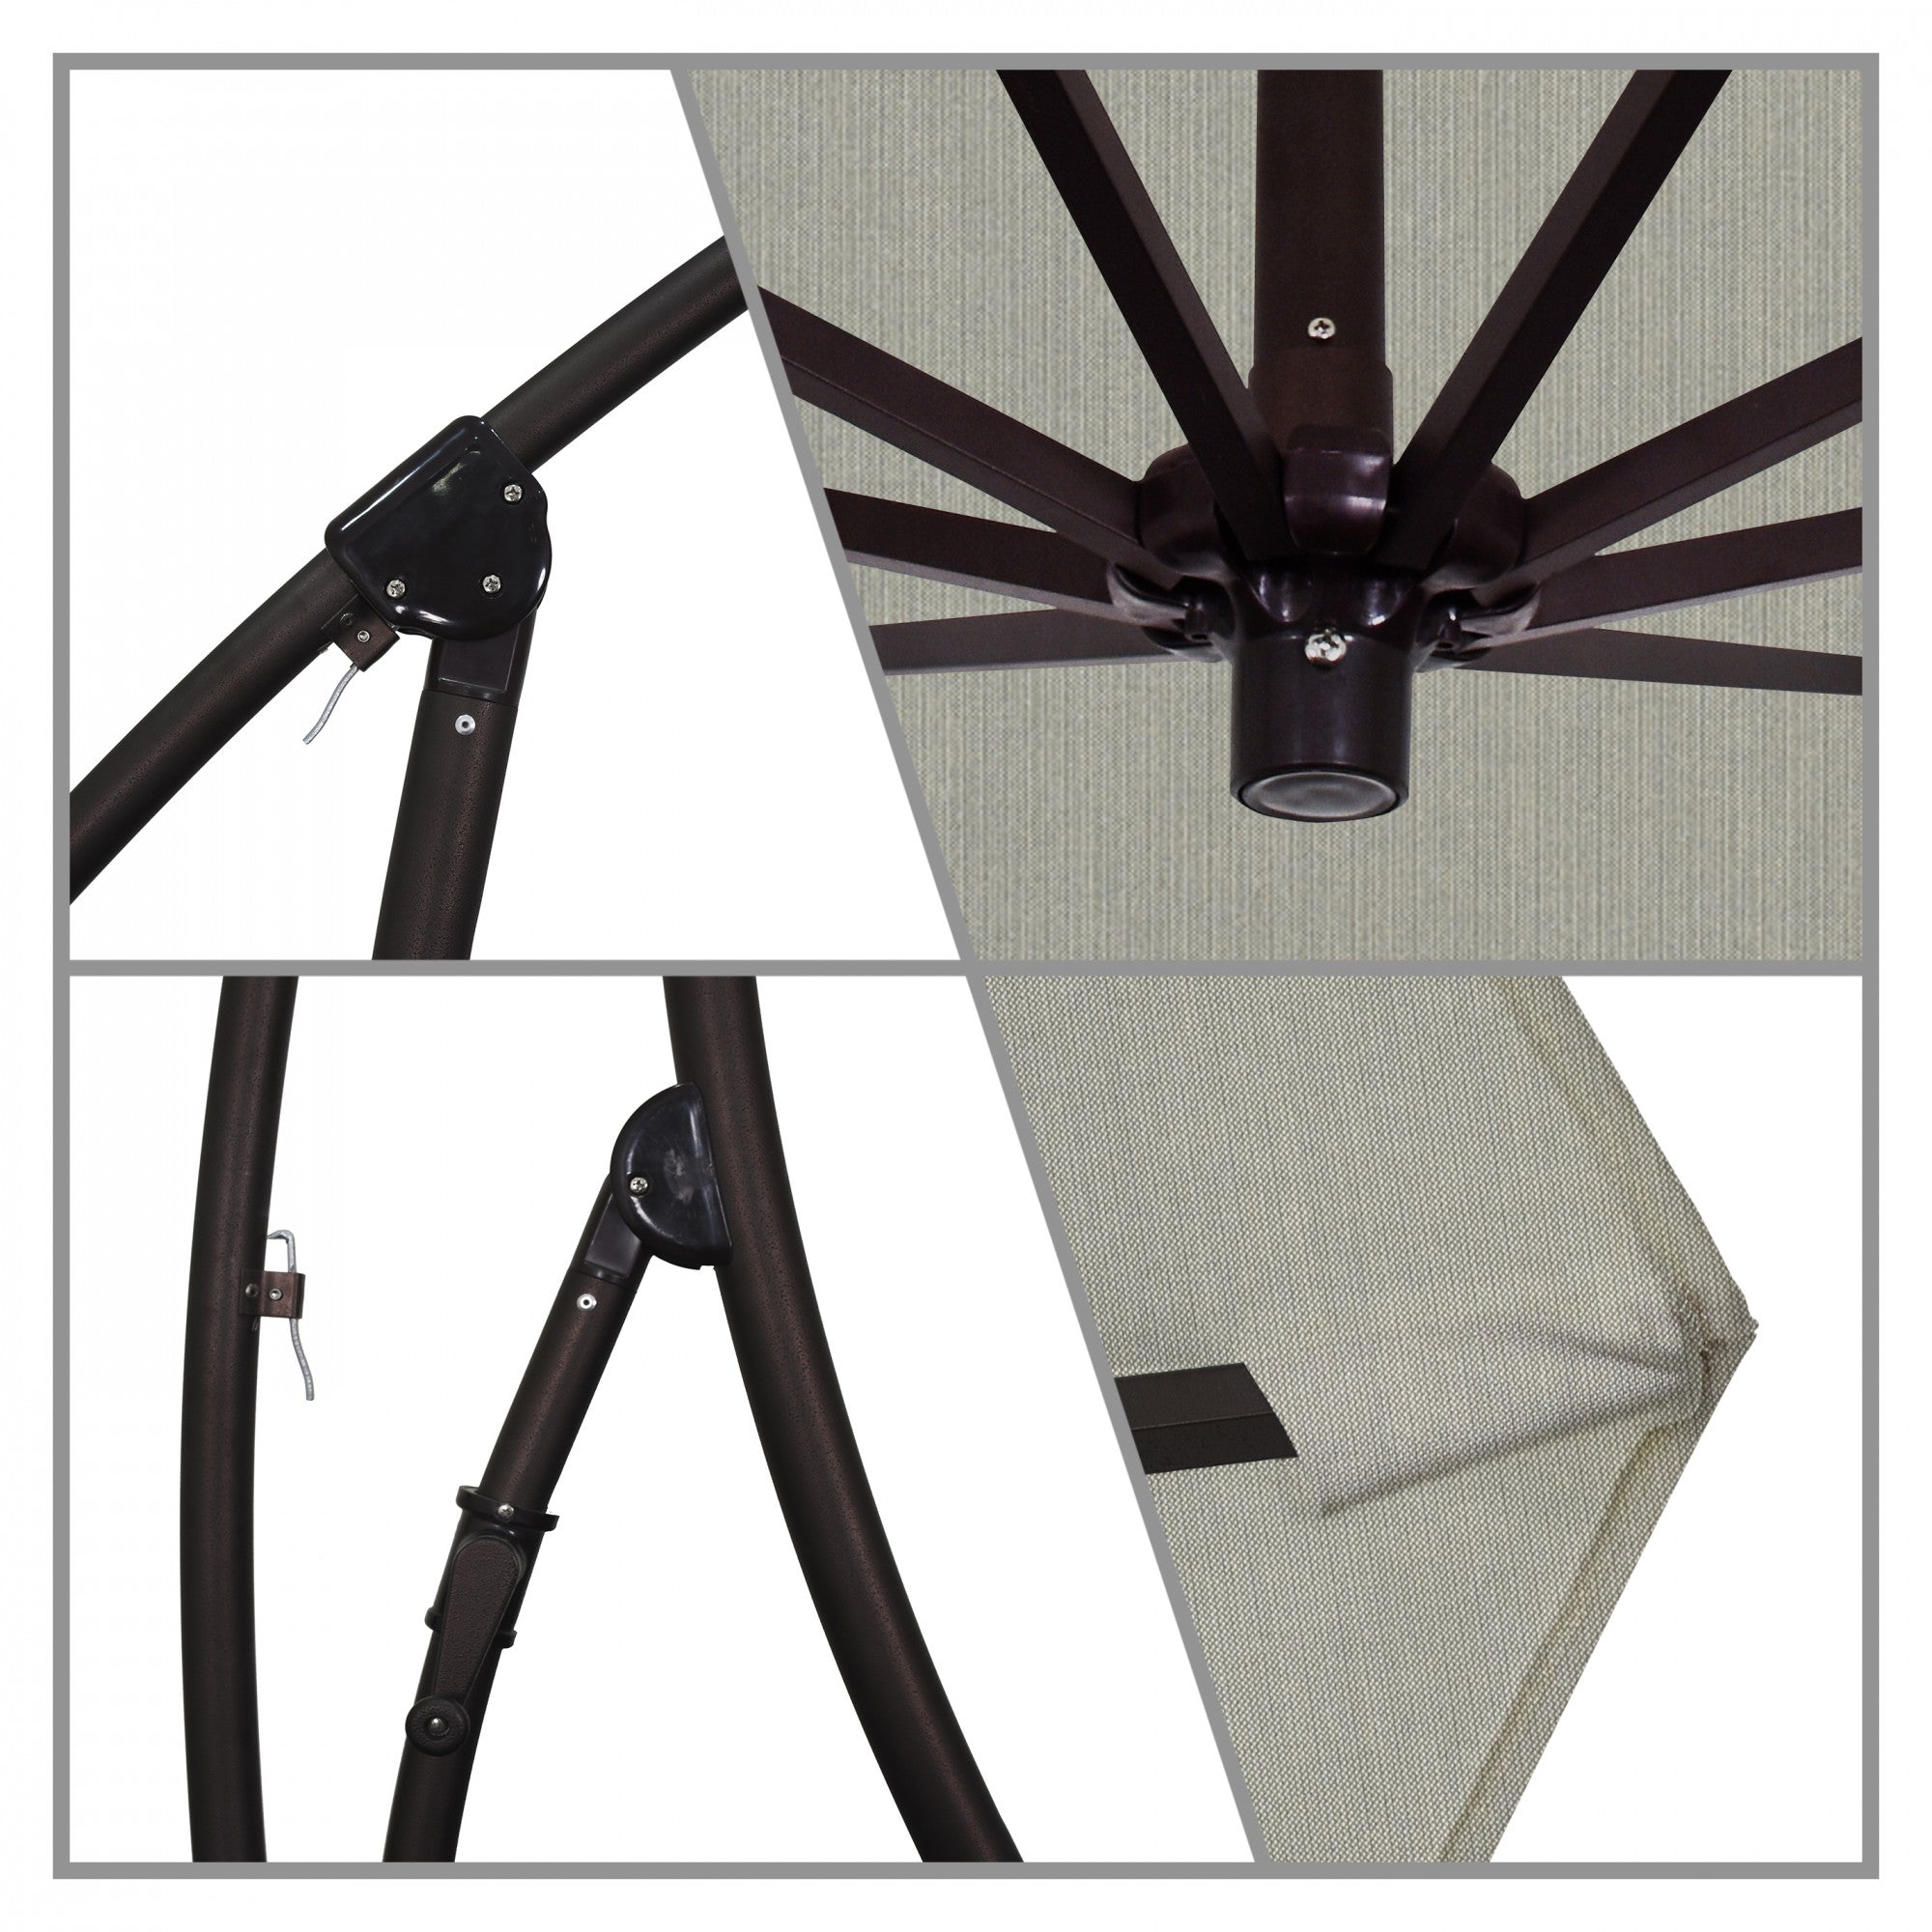 California Umbrella - 9' - Cantilever Umbrella - Aluminum Pole - Spectrum Dove - Sunbrella  - BA908117-48032